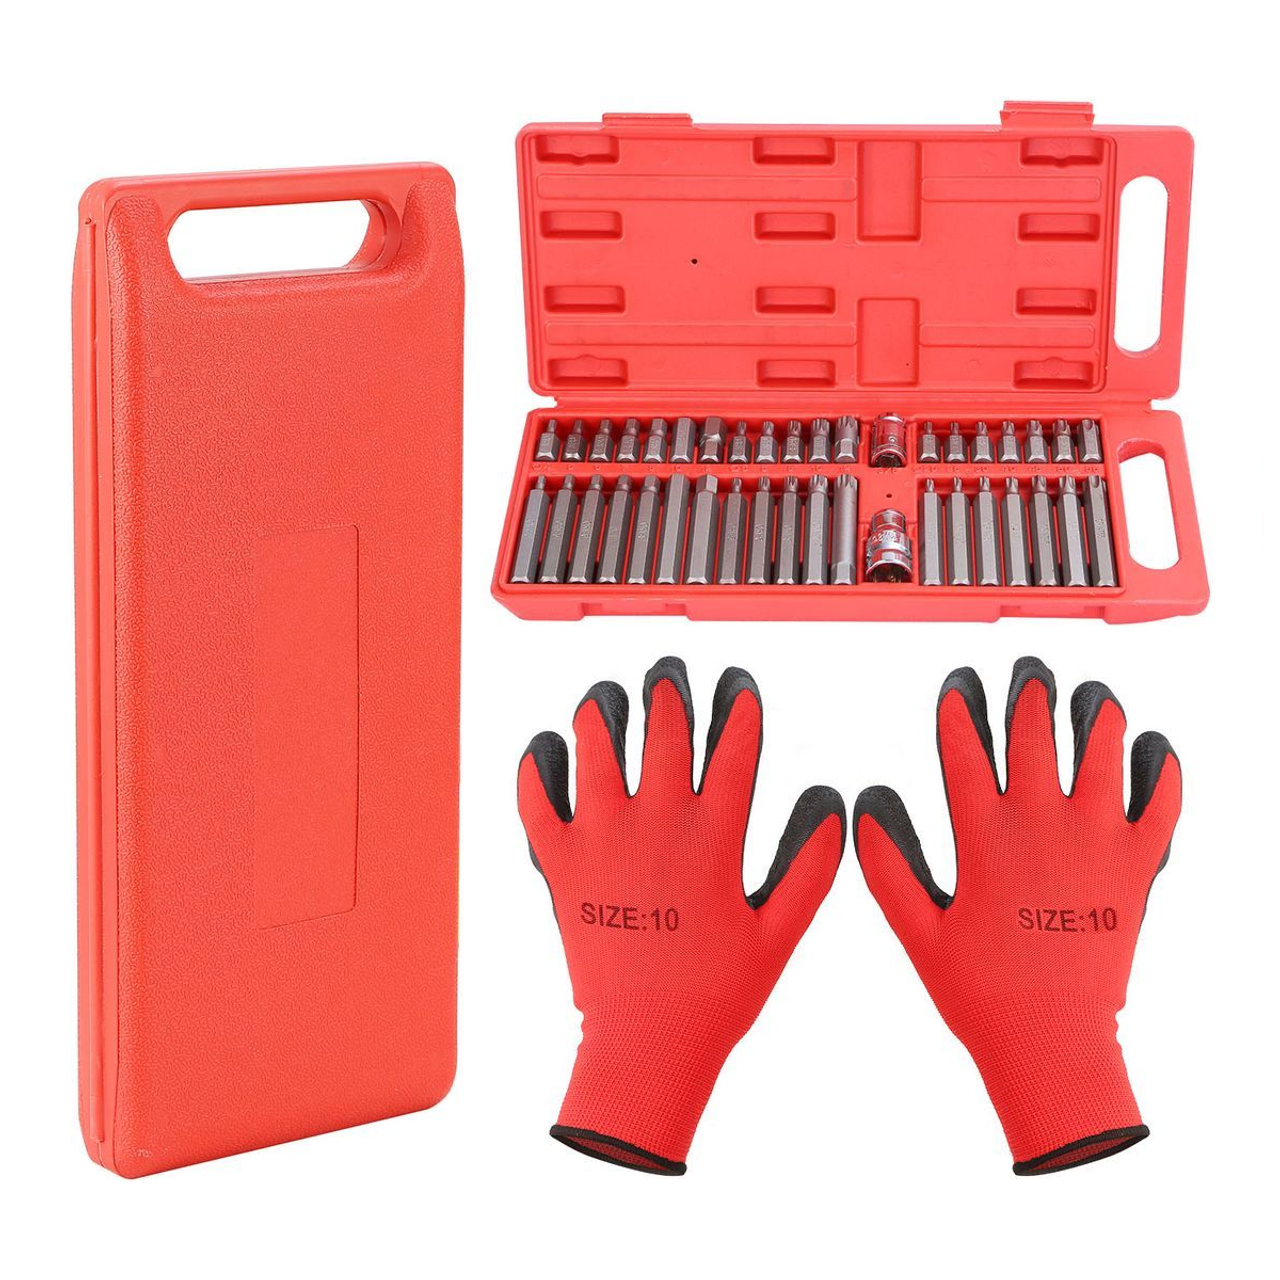 iMounTEK® 40-Piece Socket Bit Set with Gloves product image